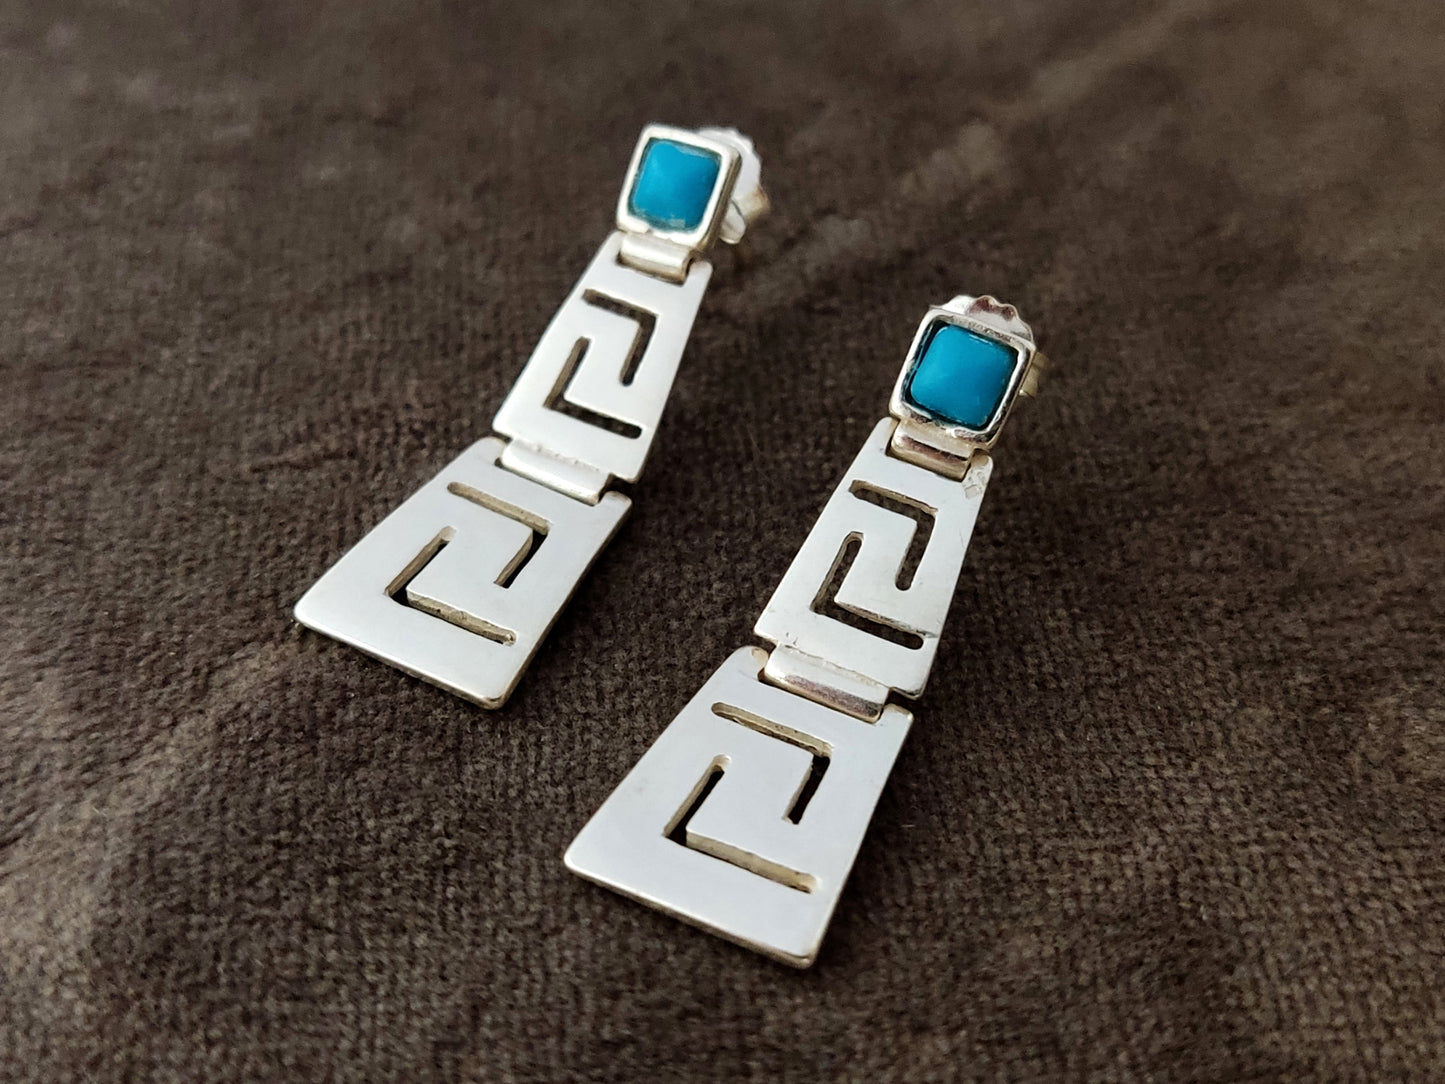 Greek Key silver gradual earrings with turquoise stones.